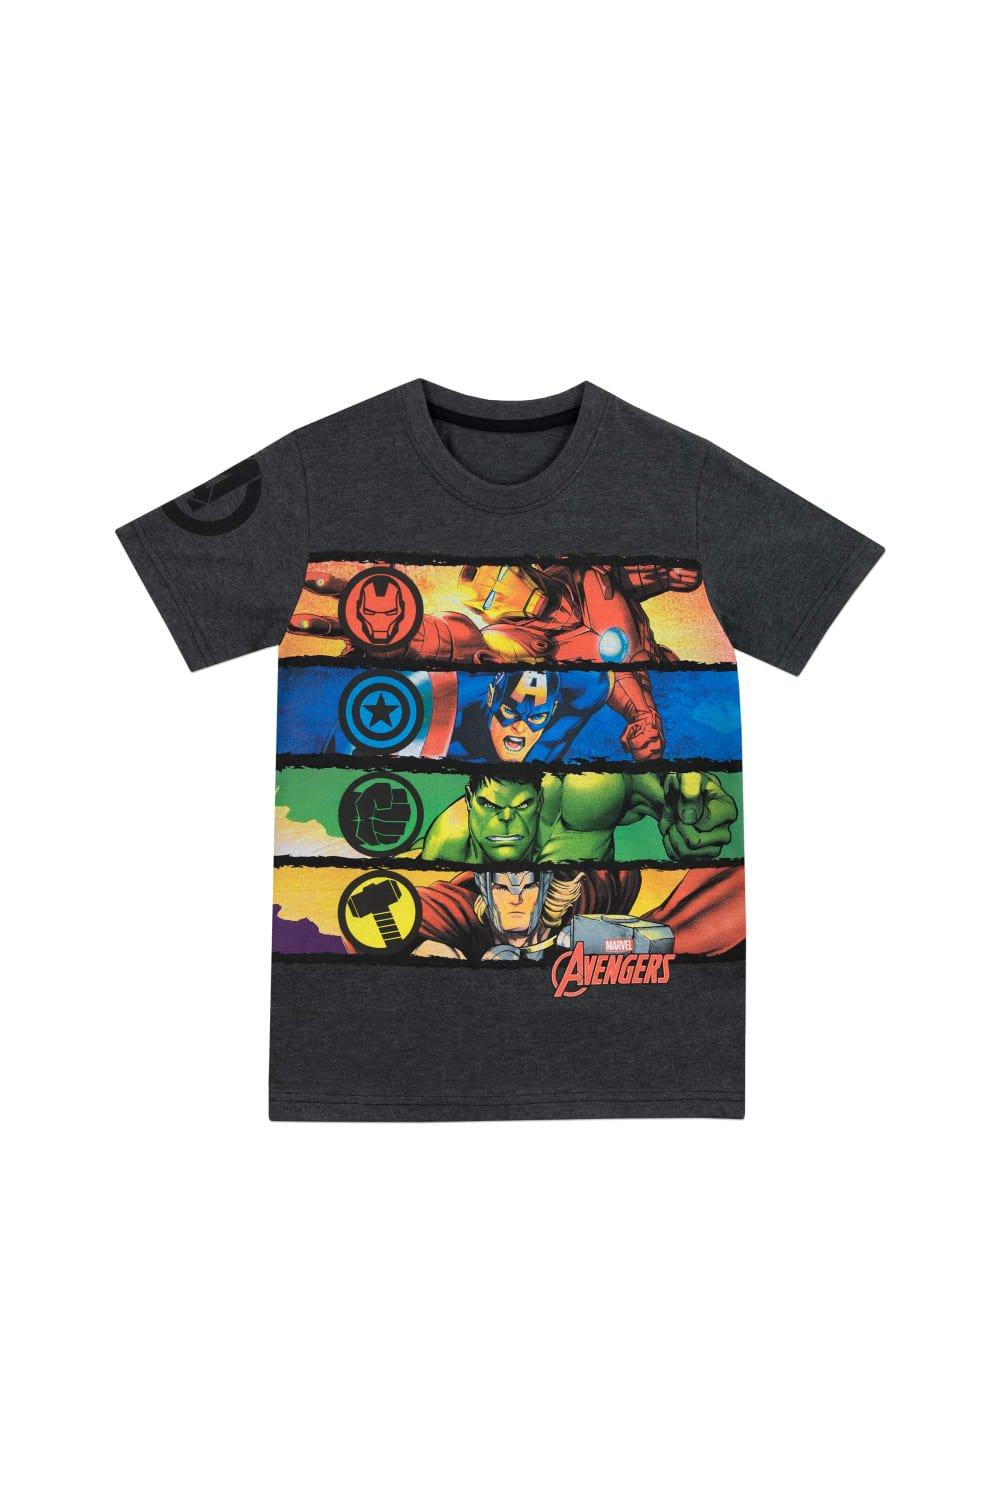 Avengers Become The Hero T-Shirt